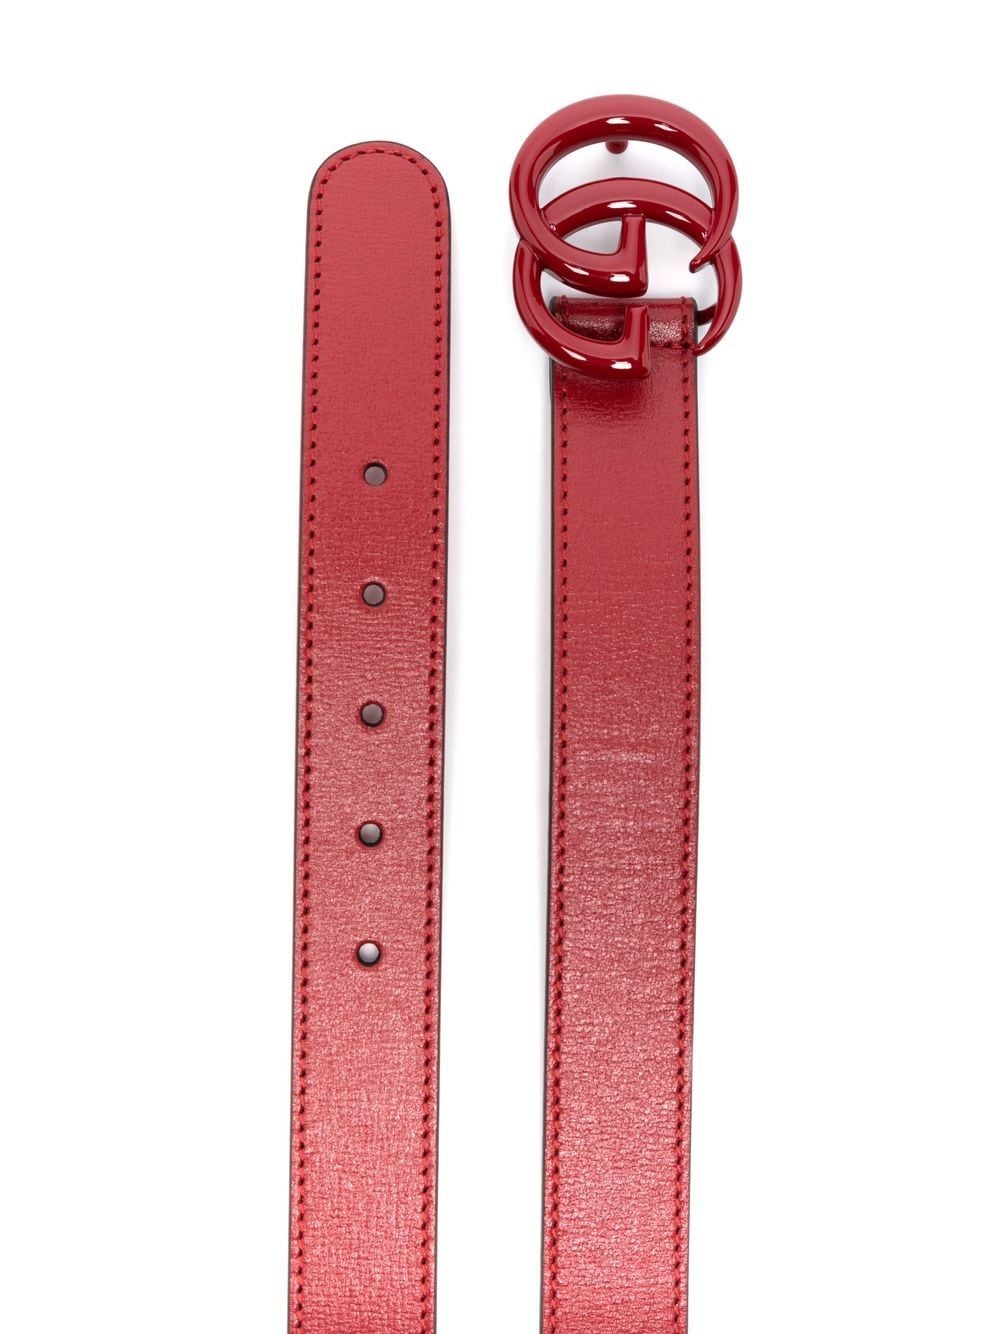 NWT NEW Gucci girls boys GG buckle patent belt S M aqua bluegreen pink  258395